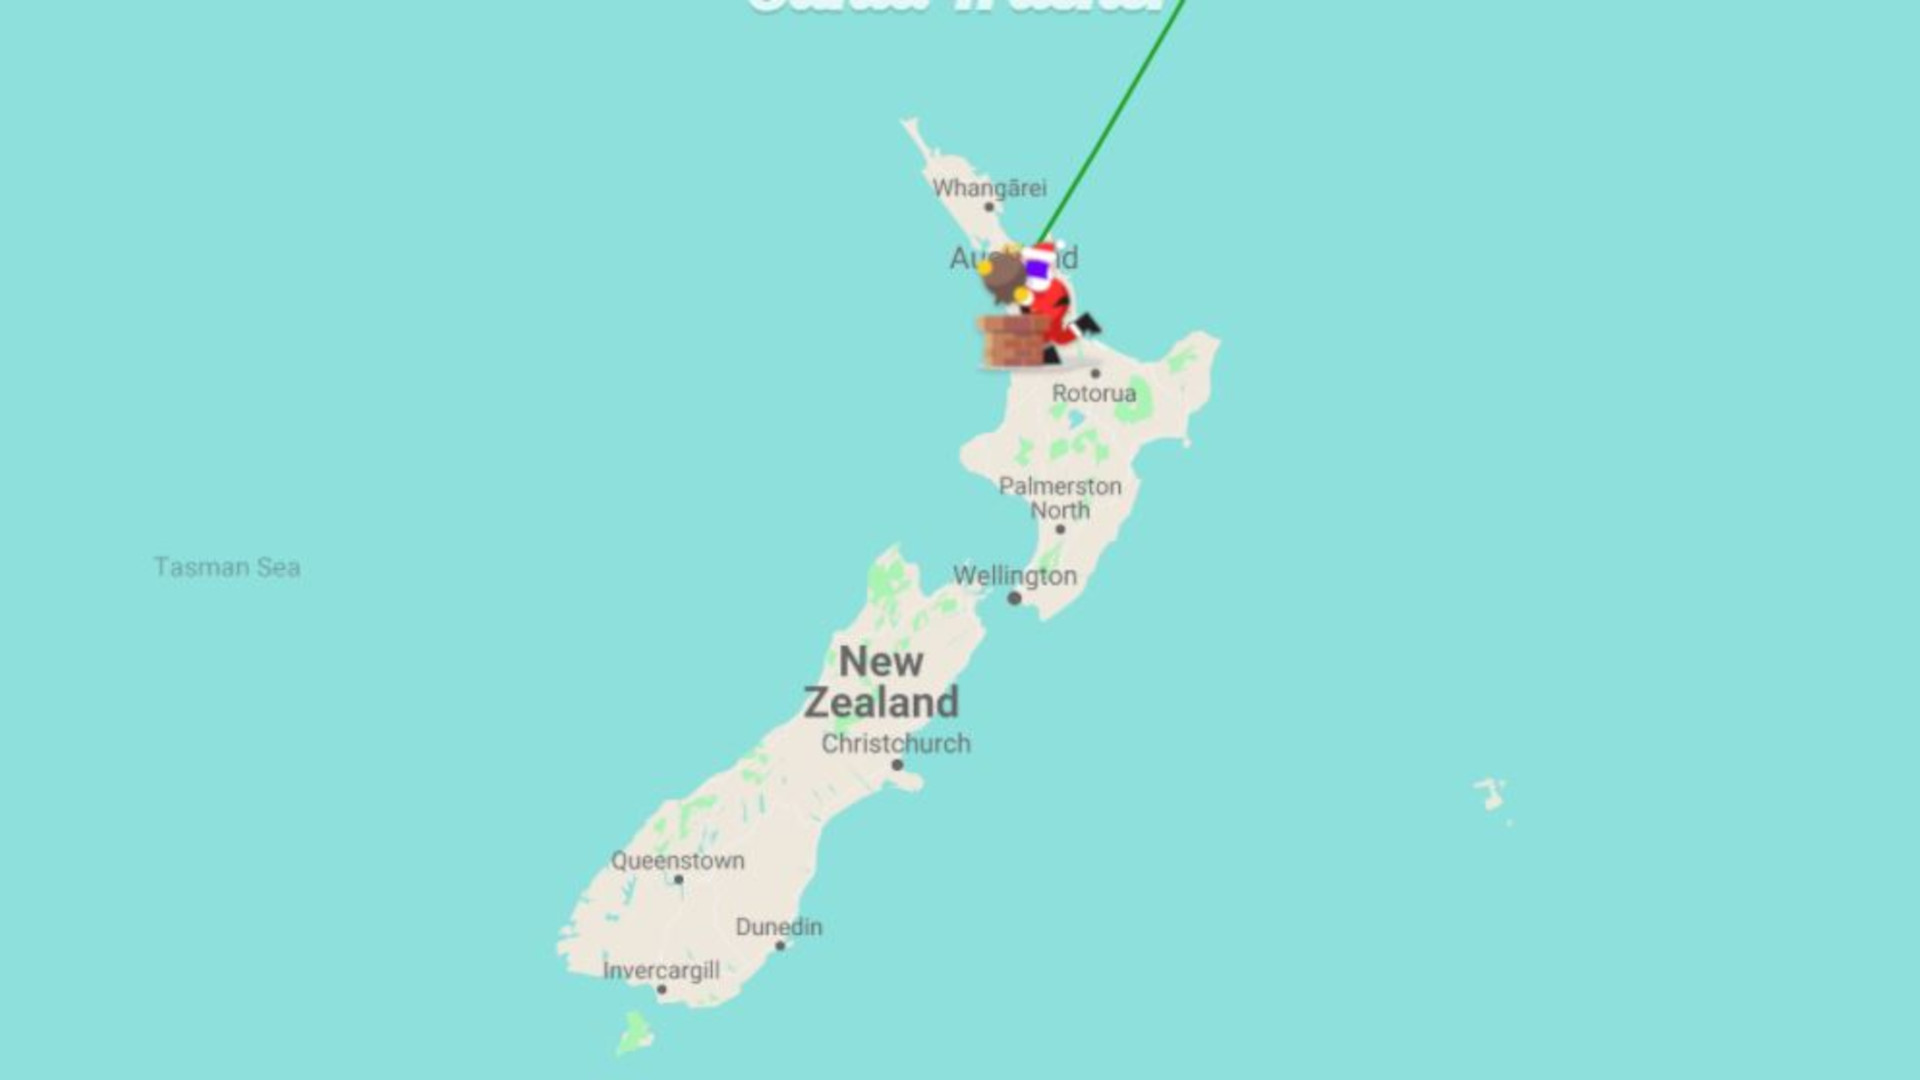 Santa in Новая Зеландия в Google Santa Tracker